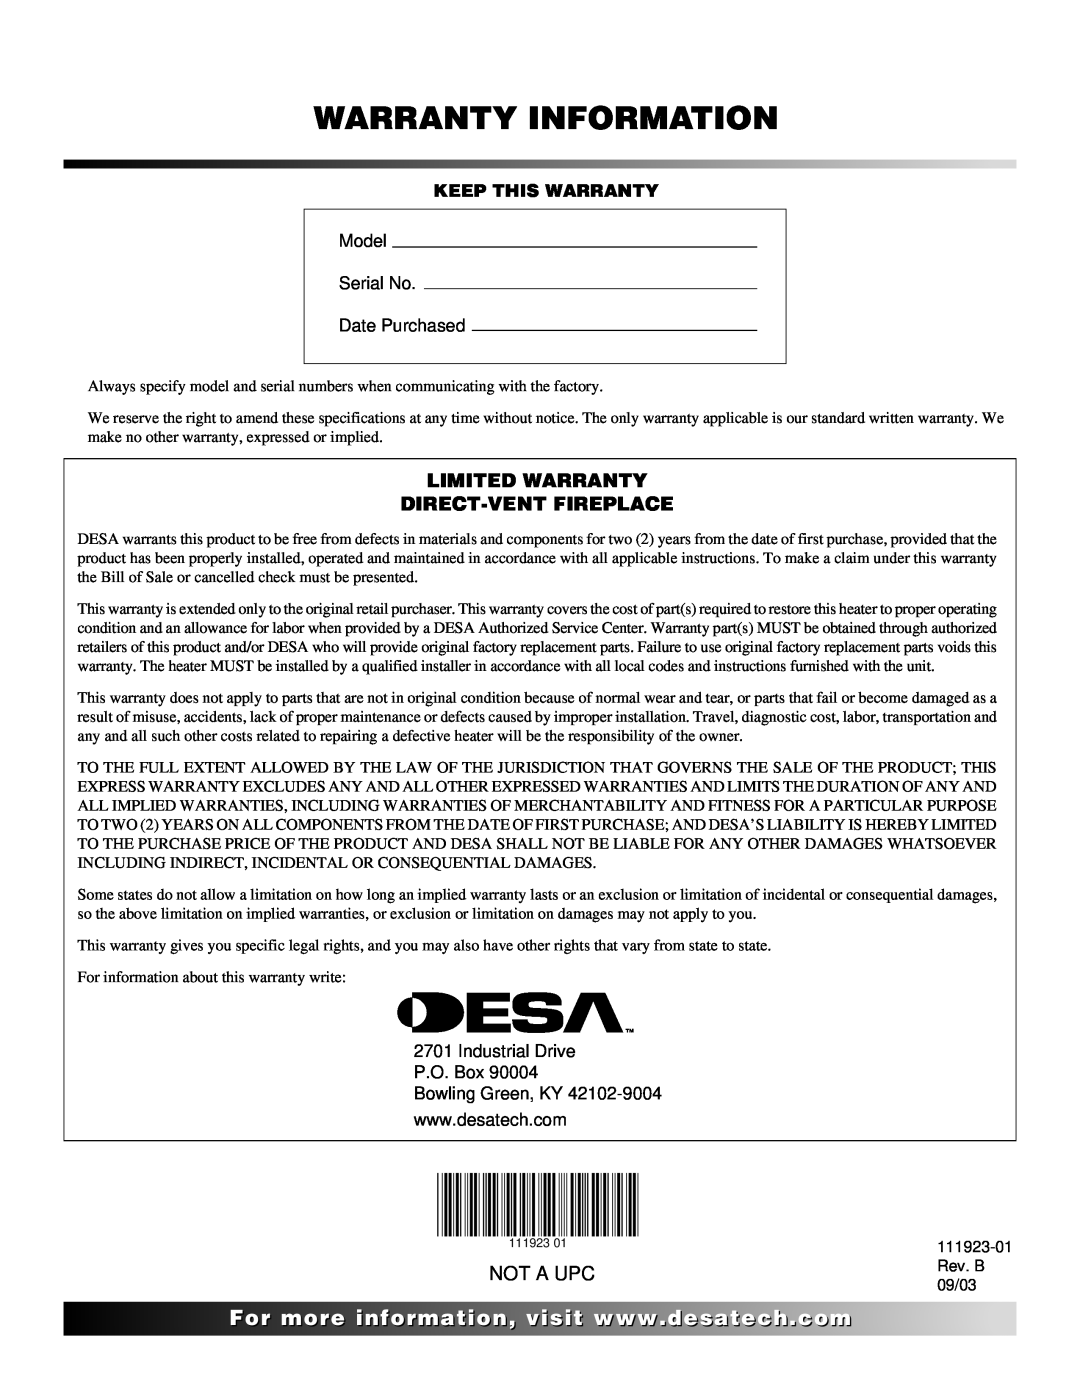 Desa (V)K36N SERIES, (V)K36P SERIES Limited Warranty Direct-Ventfireplace, Not A Upc, Warranty Information 